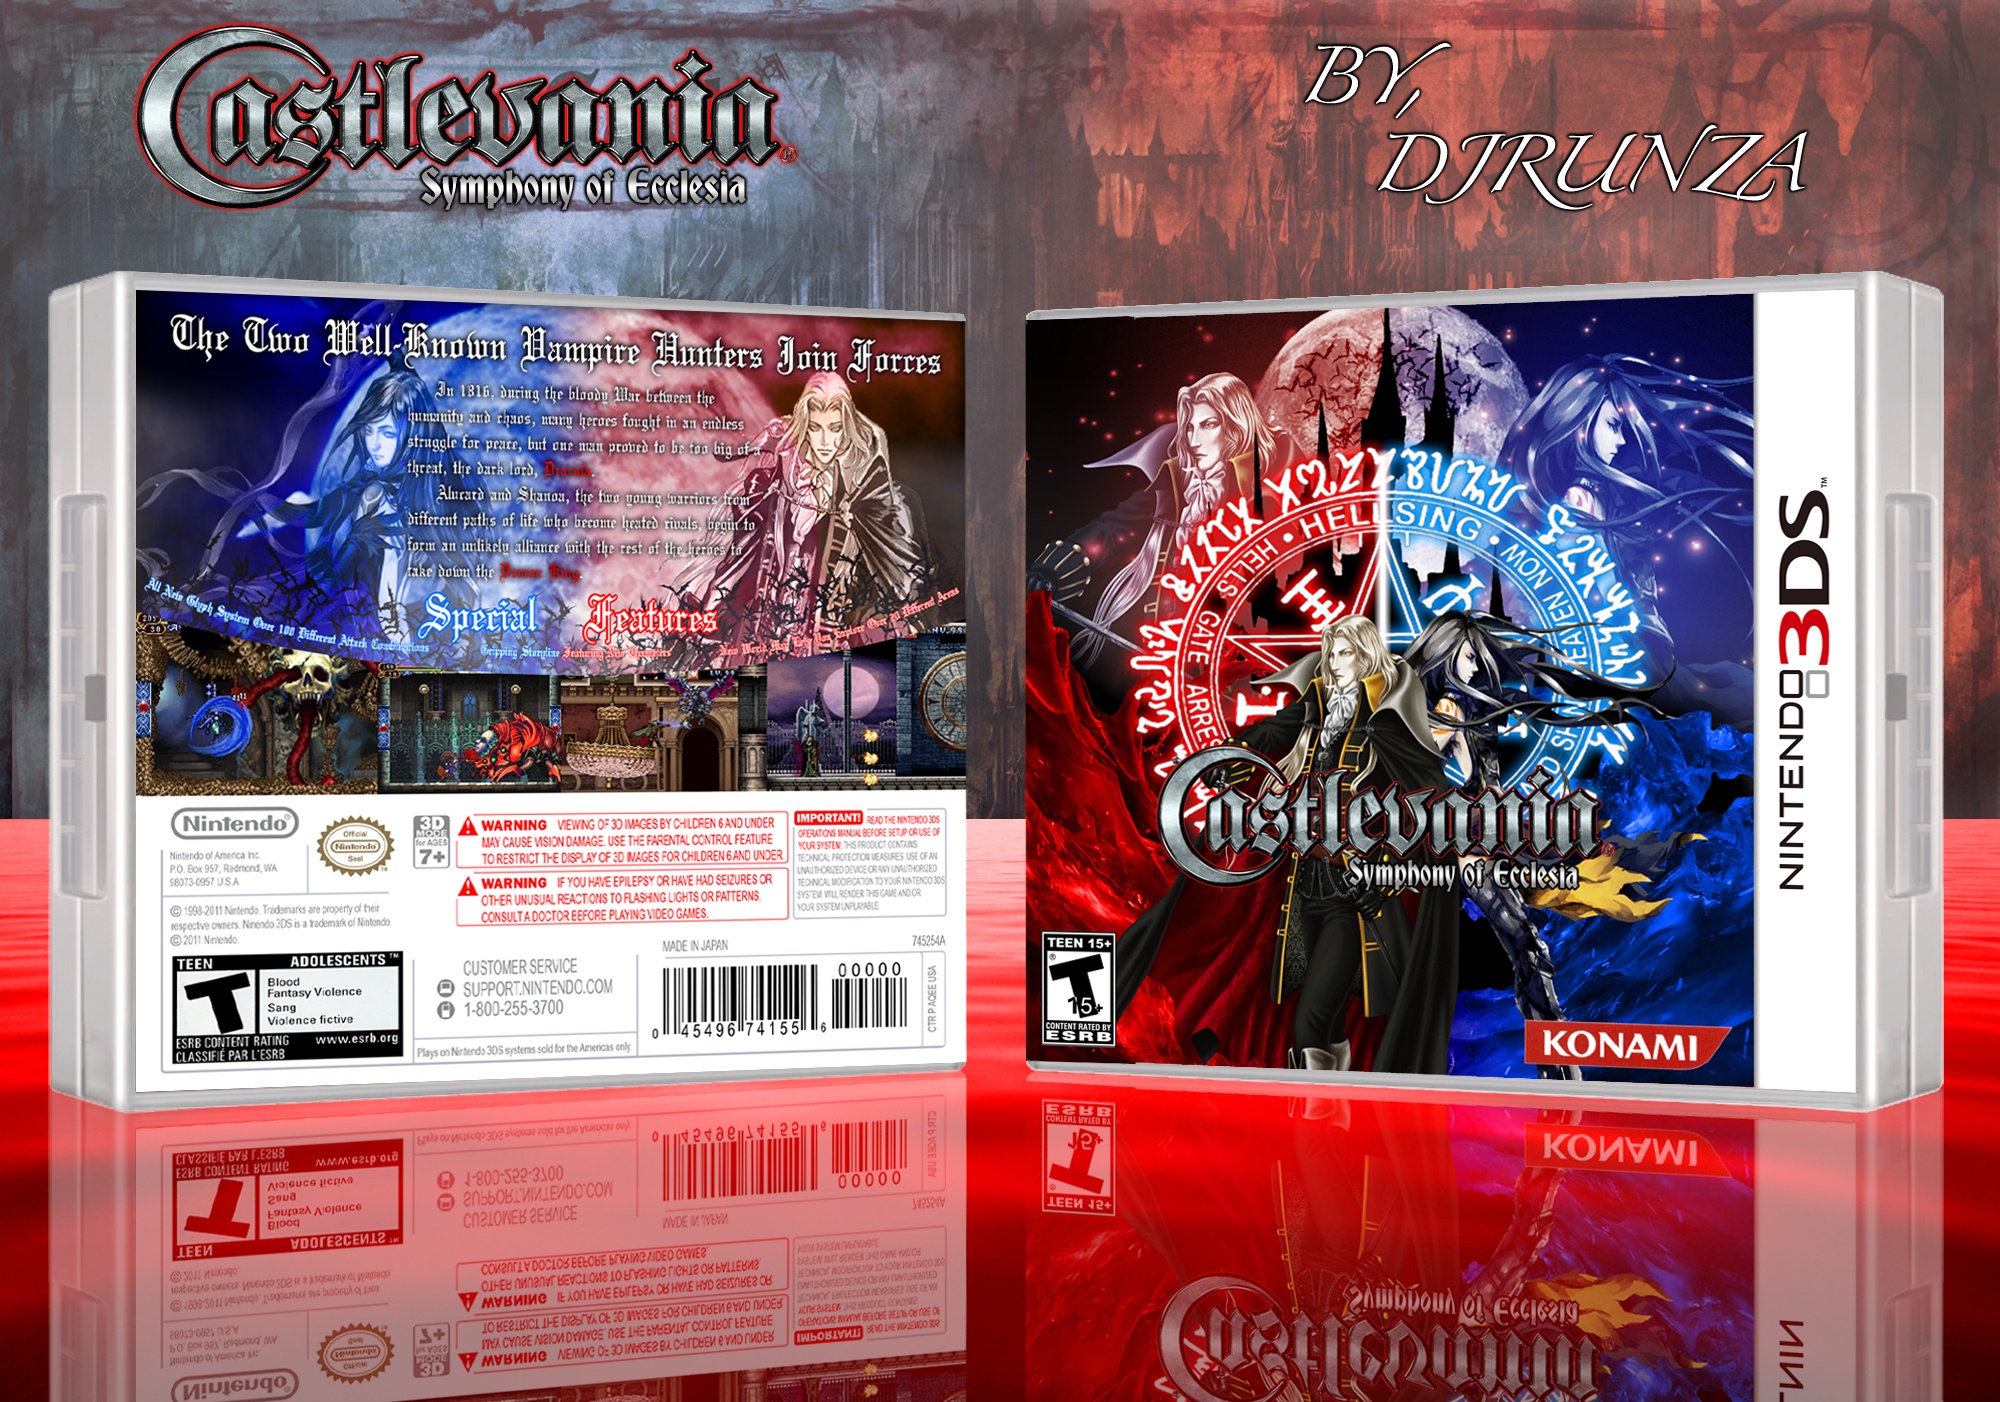 Castlevania: Symphony of Ecclesia box cover